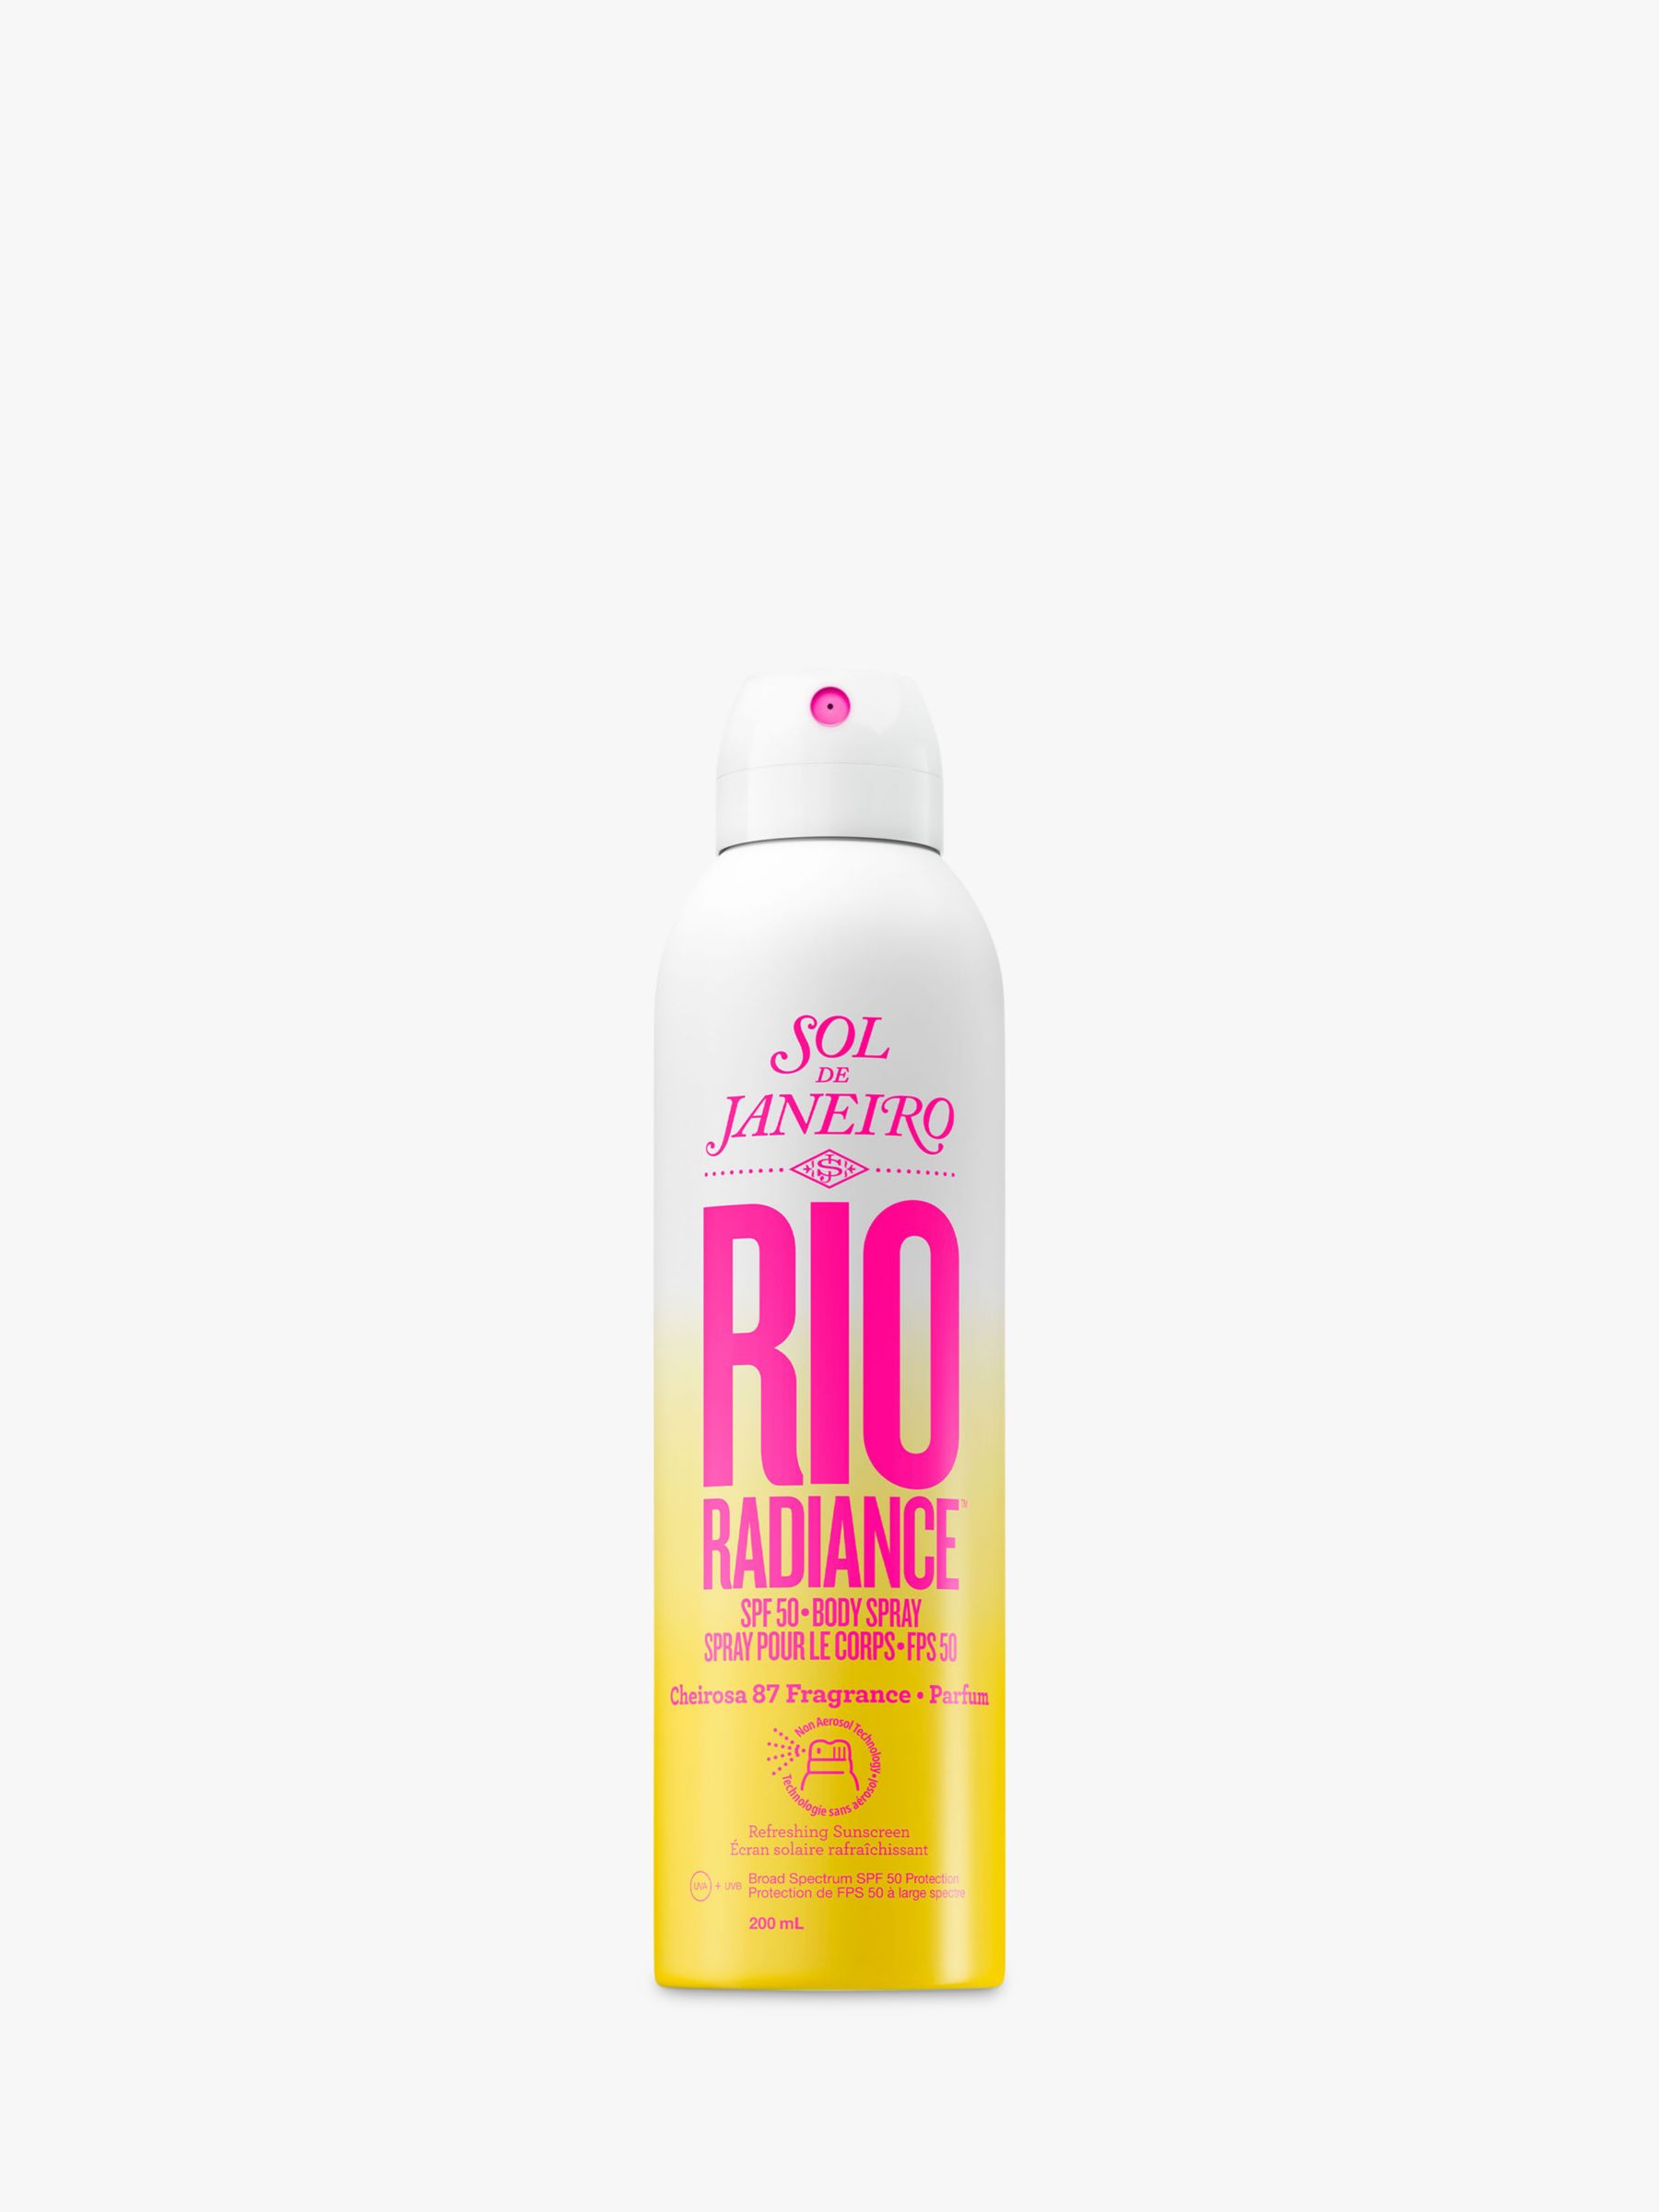 Sol de Janeiro Rio Radiance Body Spray SPF 50, 200ml 1